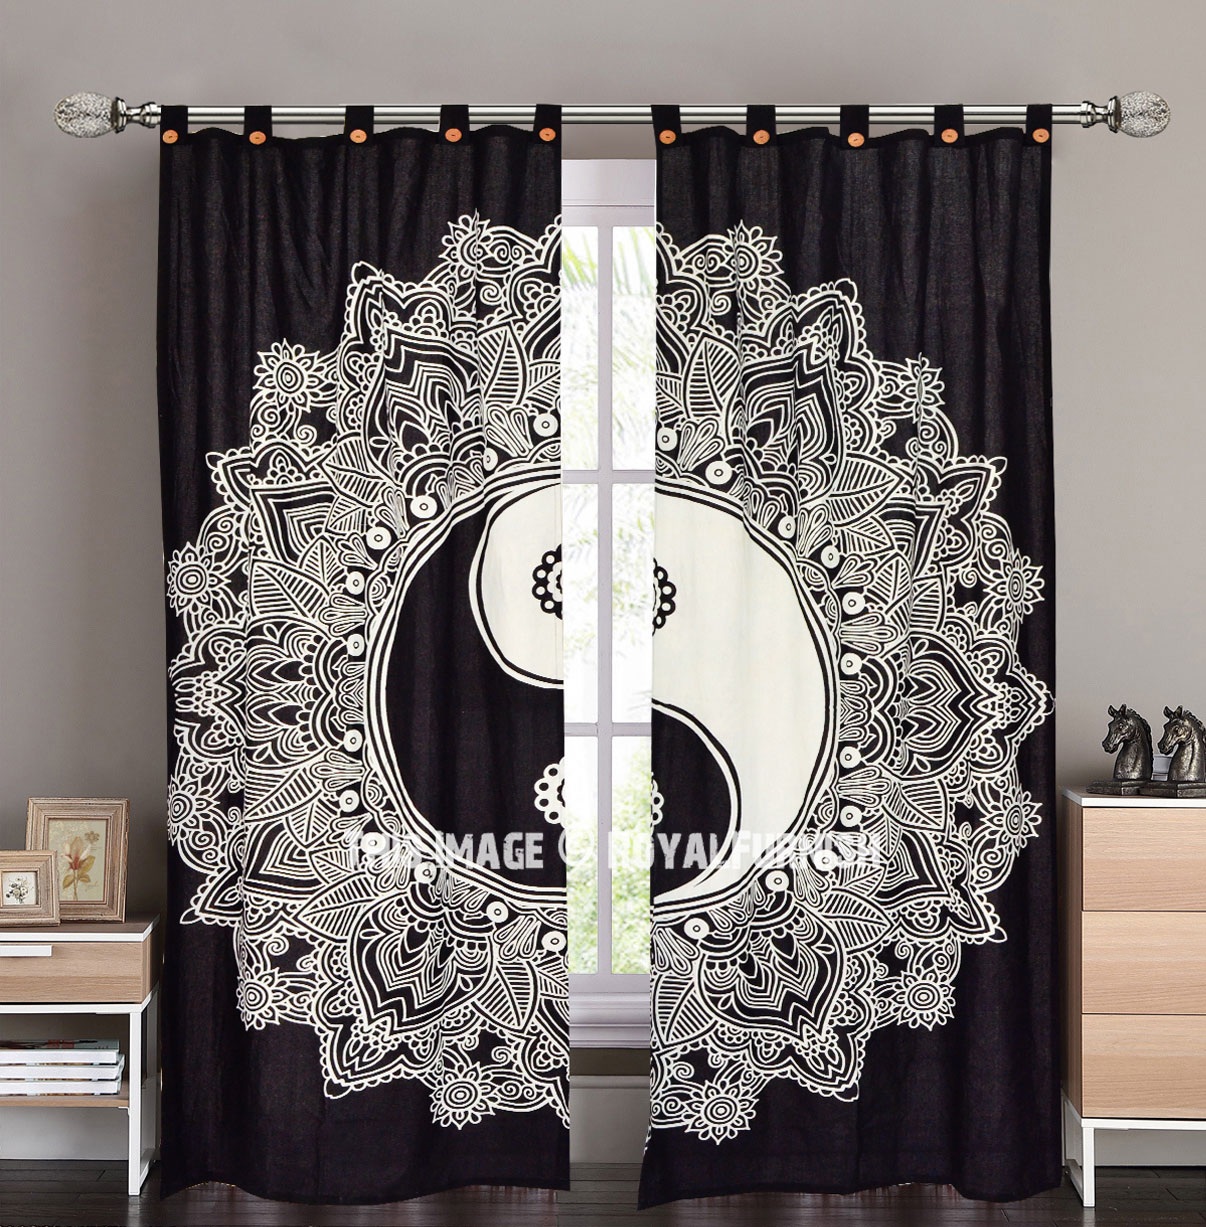 Gray Curtains Ying Yang Harmony Asian Window Drapes 2 Panel Set 108x84 Inches 